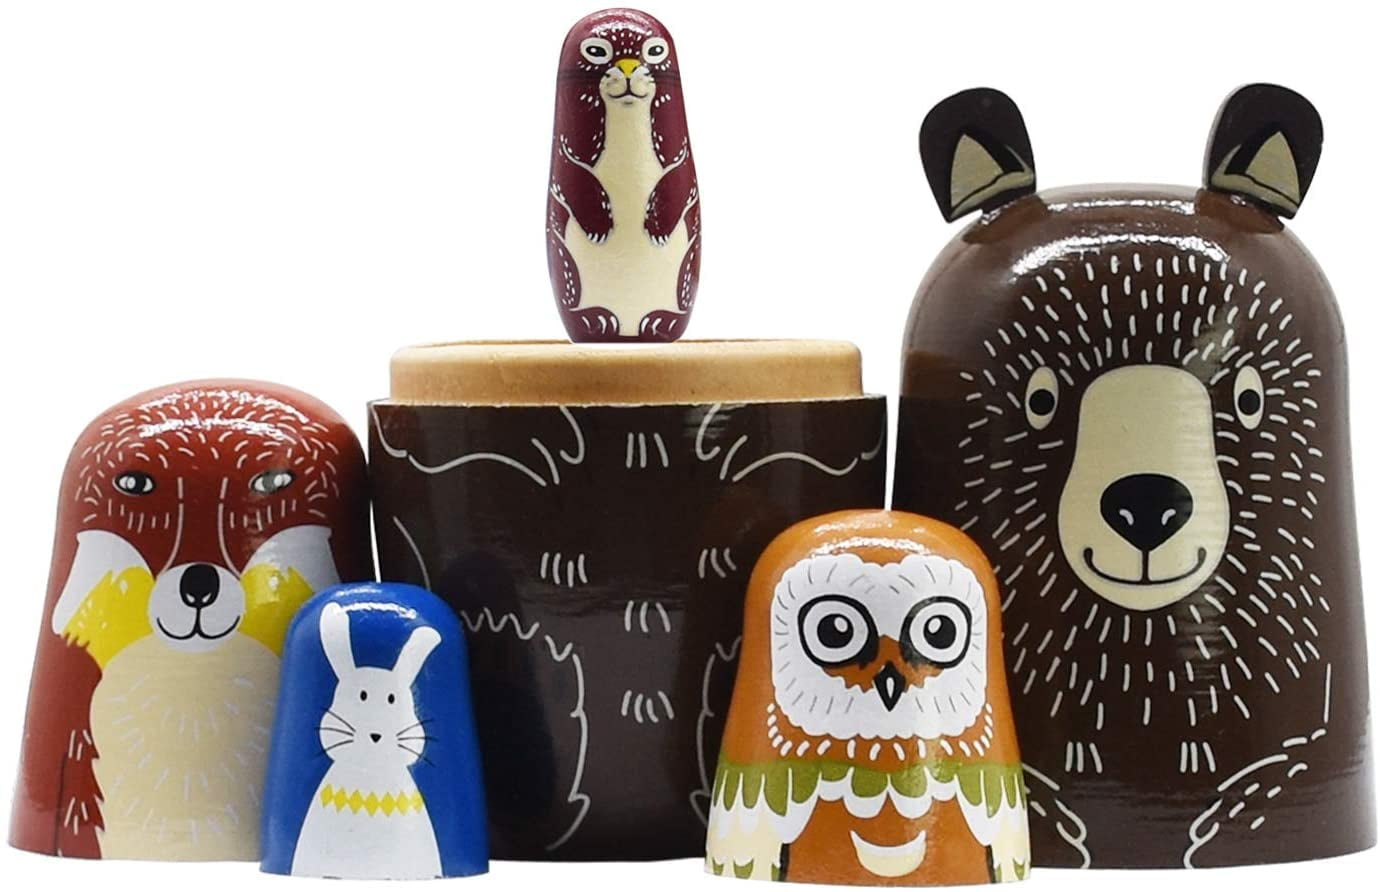 5 Pieces Nesting Dolls Russian Matryoshka Dolls Handmade Wooden Cartoon Animals Pattern Bear Cute Toys Handmade Gifts for Kids 